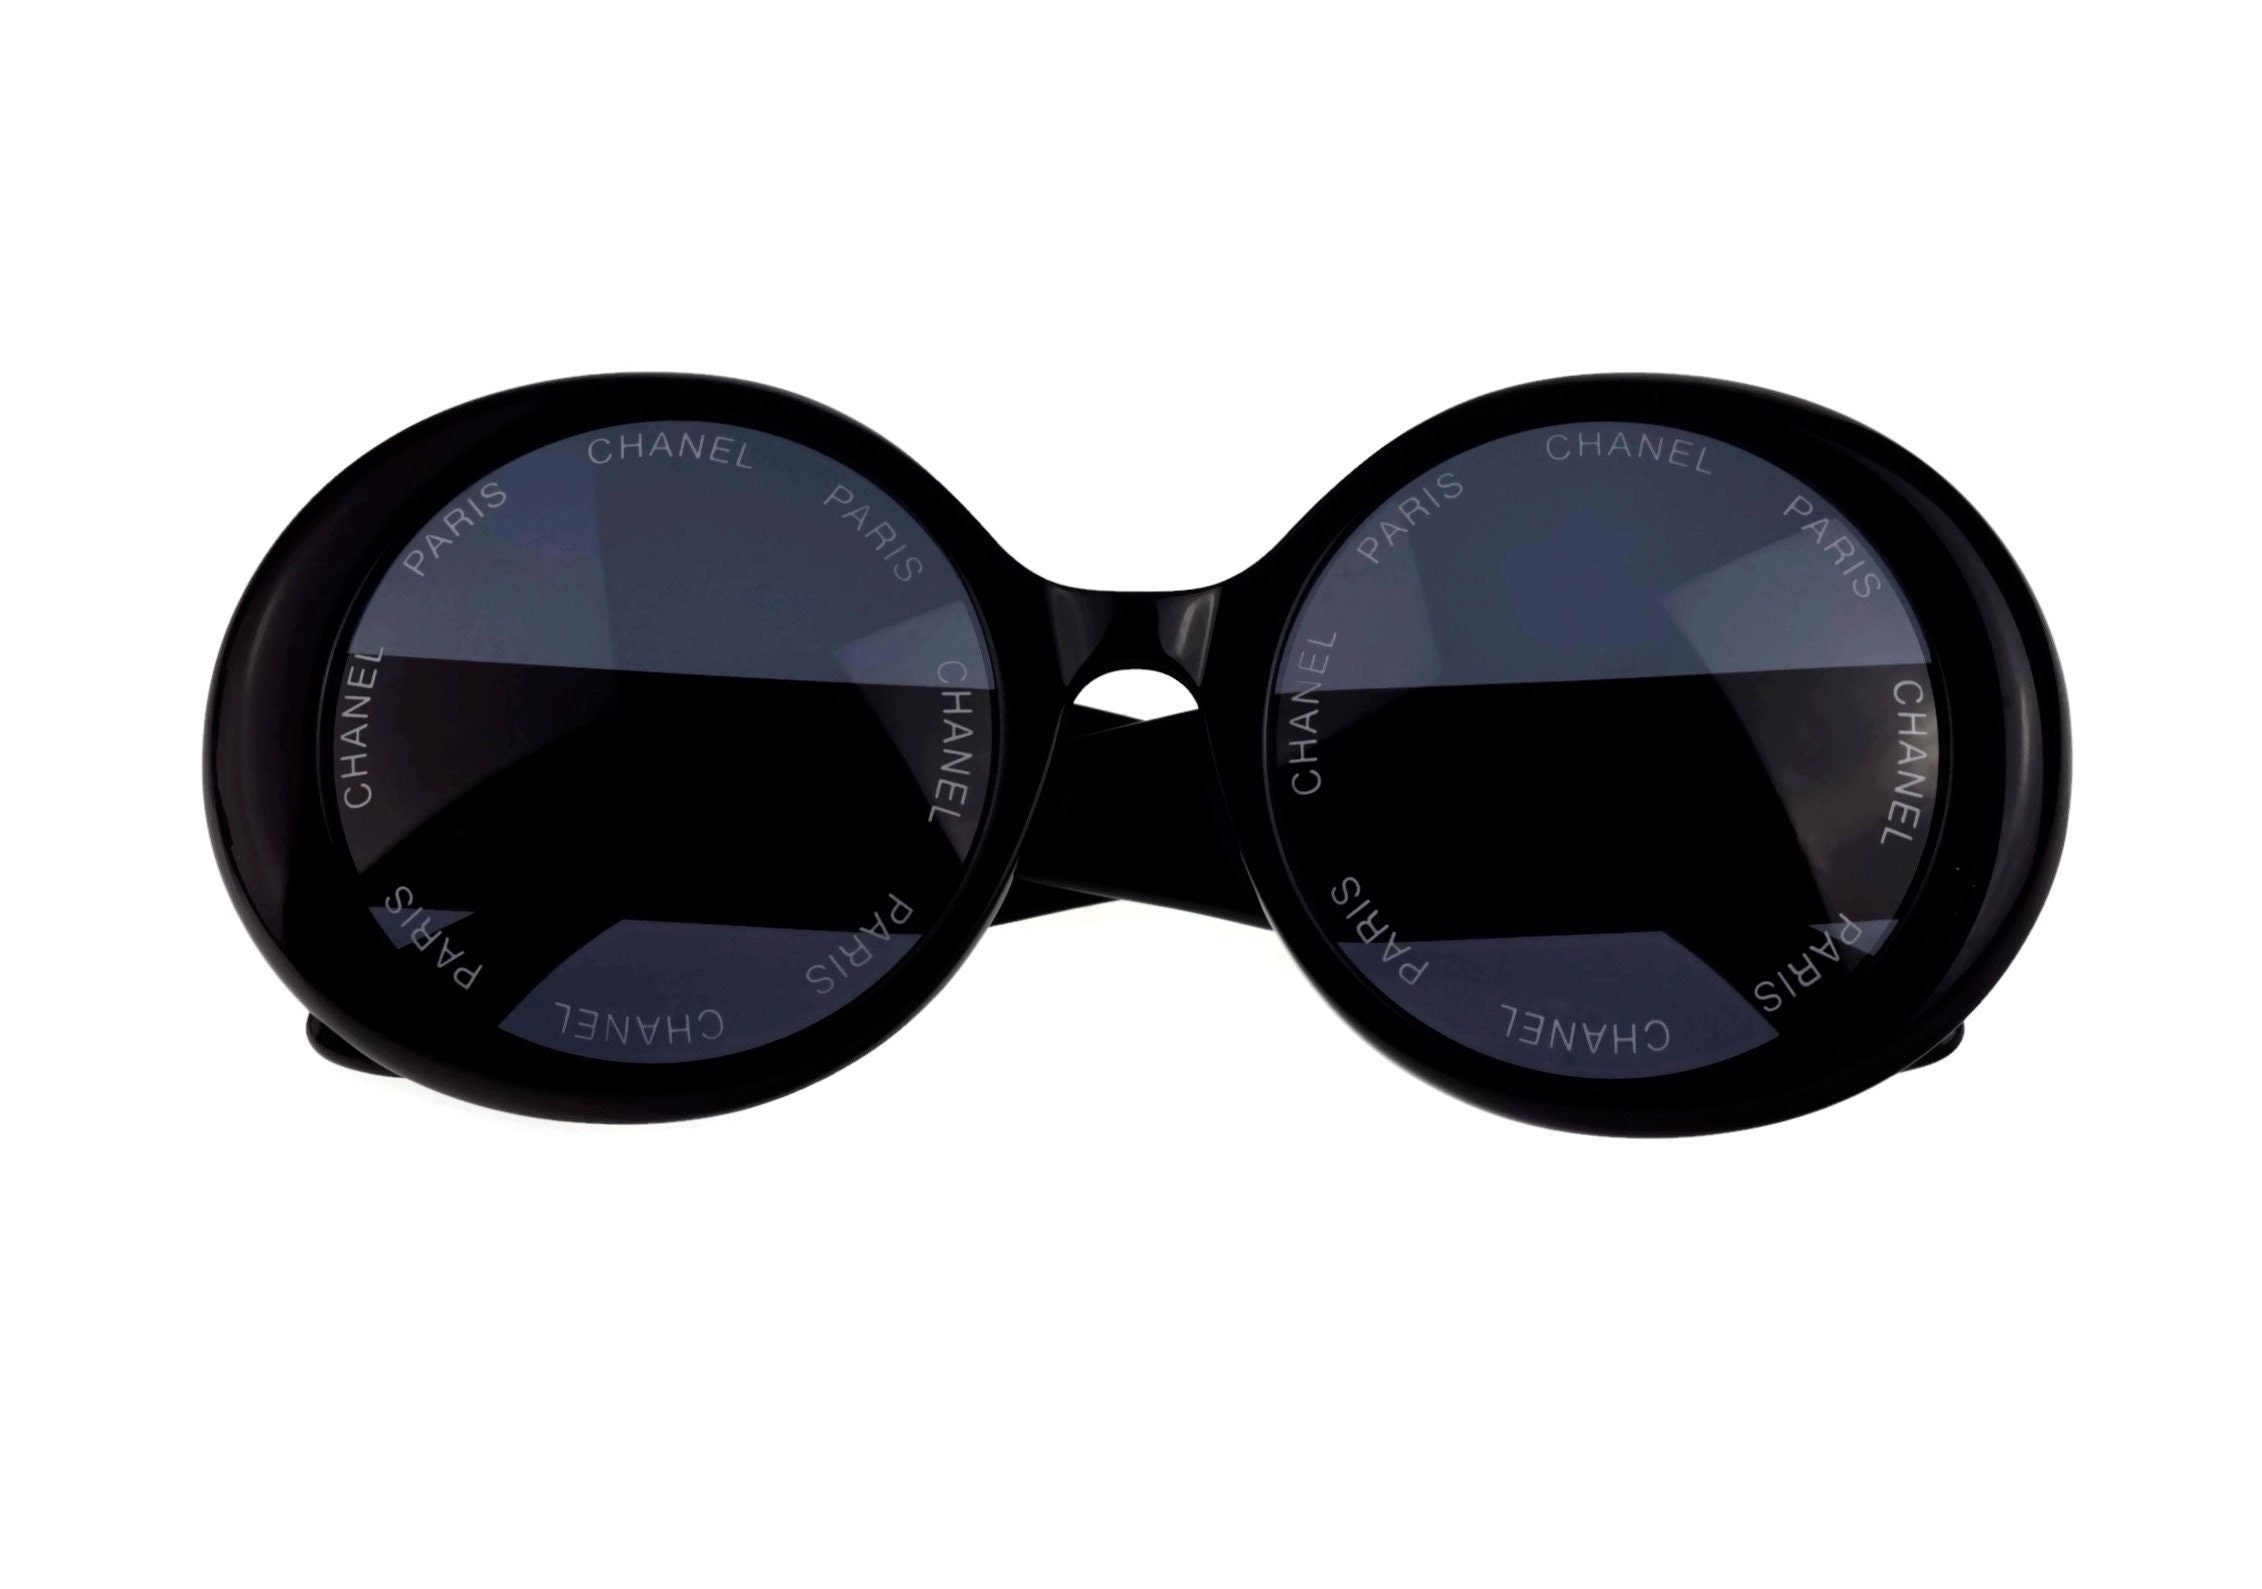 Vintage 1993 Iconic CHANEL Round White Sunglasses